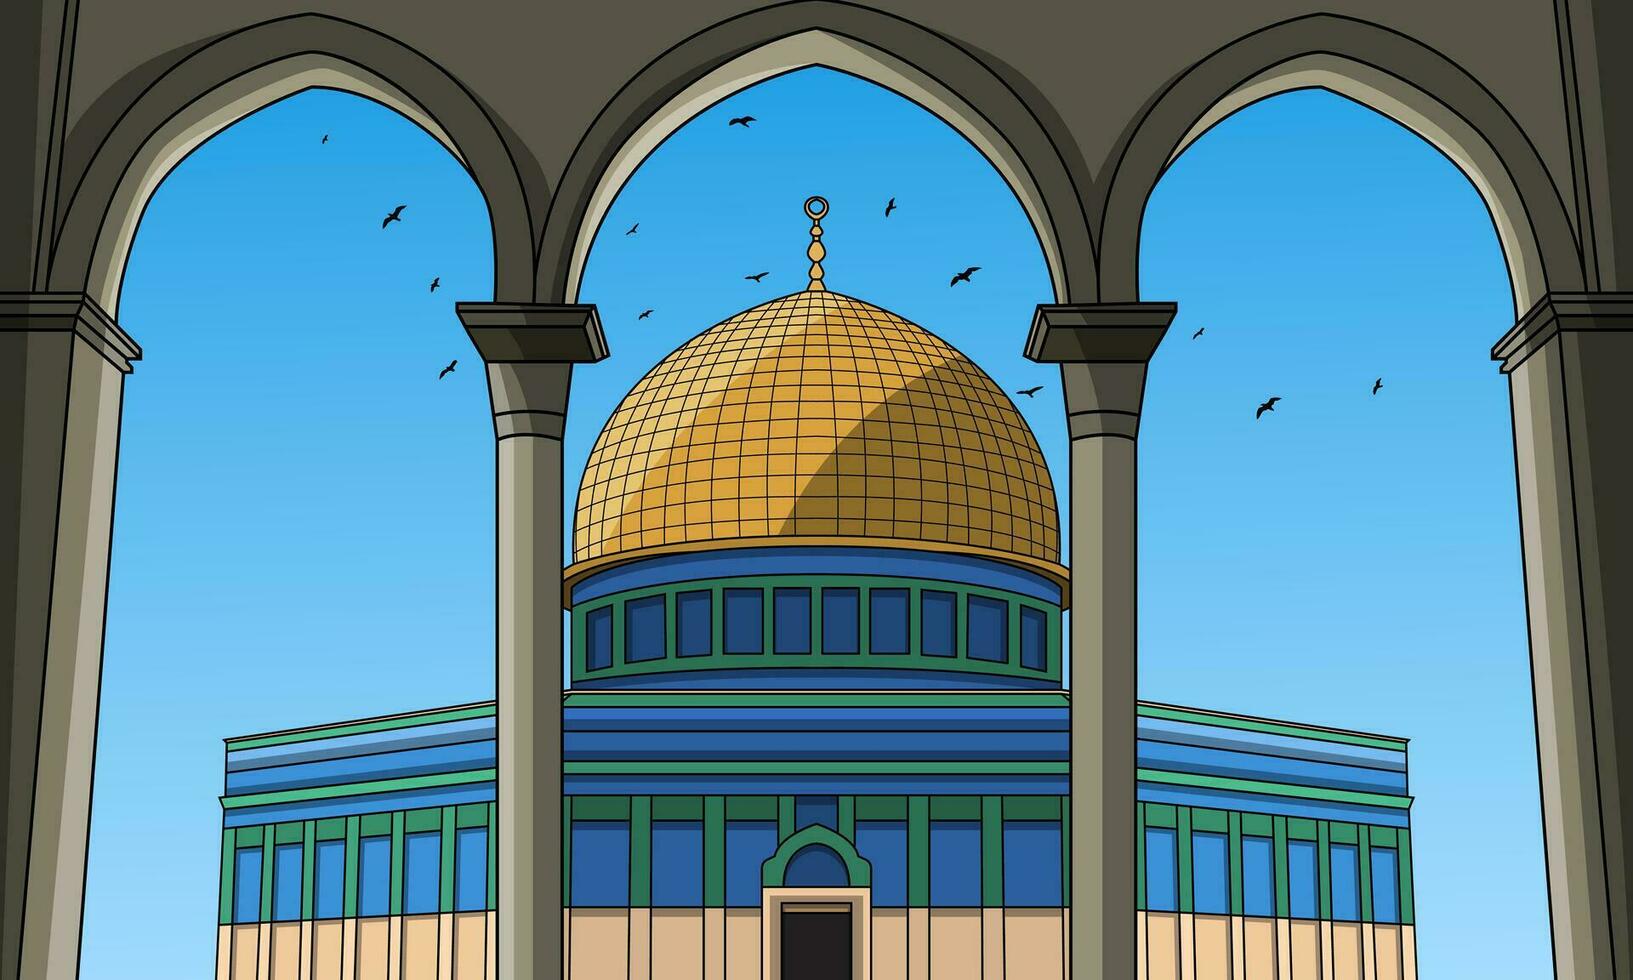 Jerusalem Palestinian al-Aqsa mosque cartoon. Vector illustration